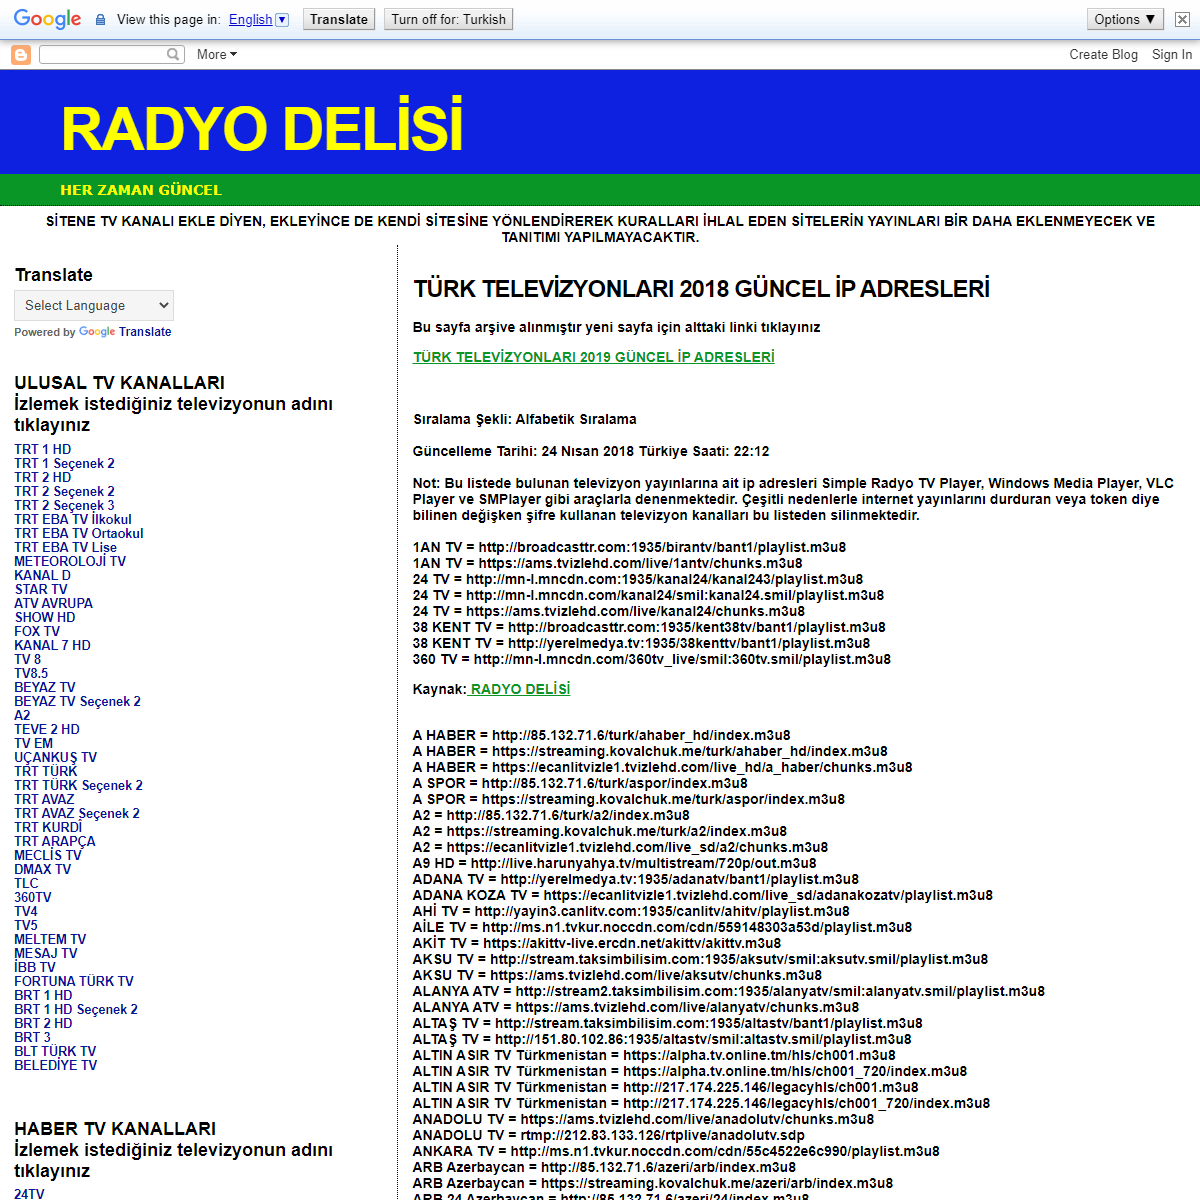 A complete backup of https://radyodelisi.blogspot.com/2009/09/turk-televizyonlari-guncel-ip-adresleri.html